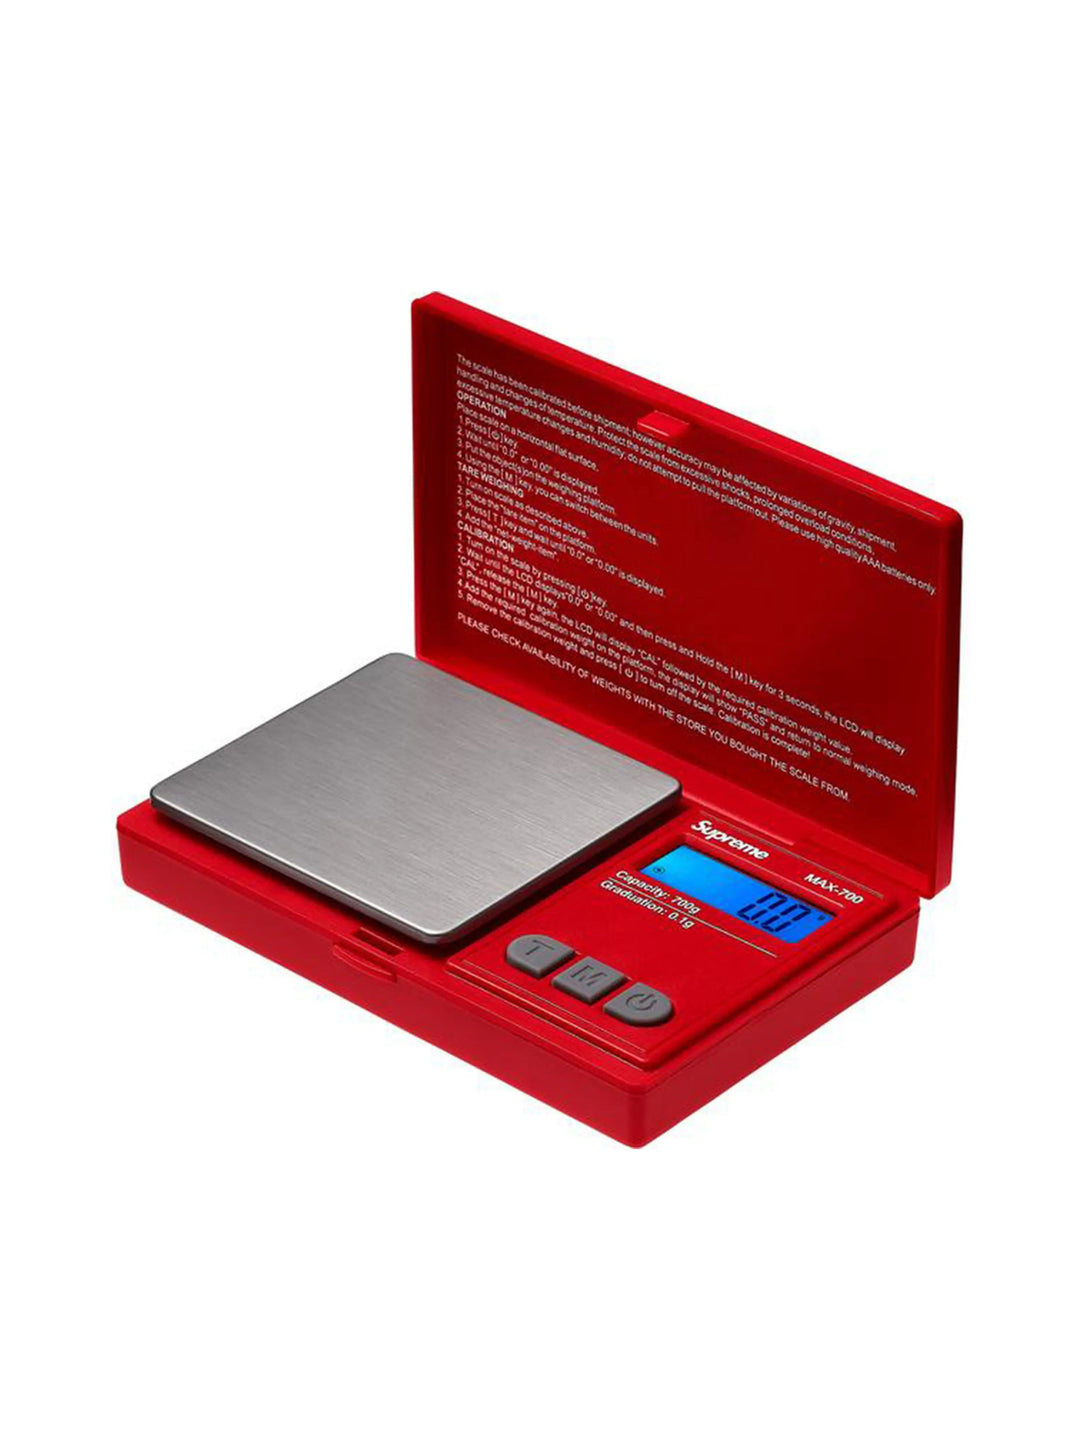 Supreme X AWS MAX-700 Digital Scale Red [FW18] Prior